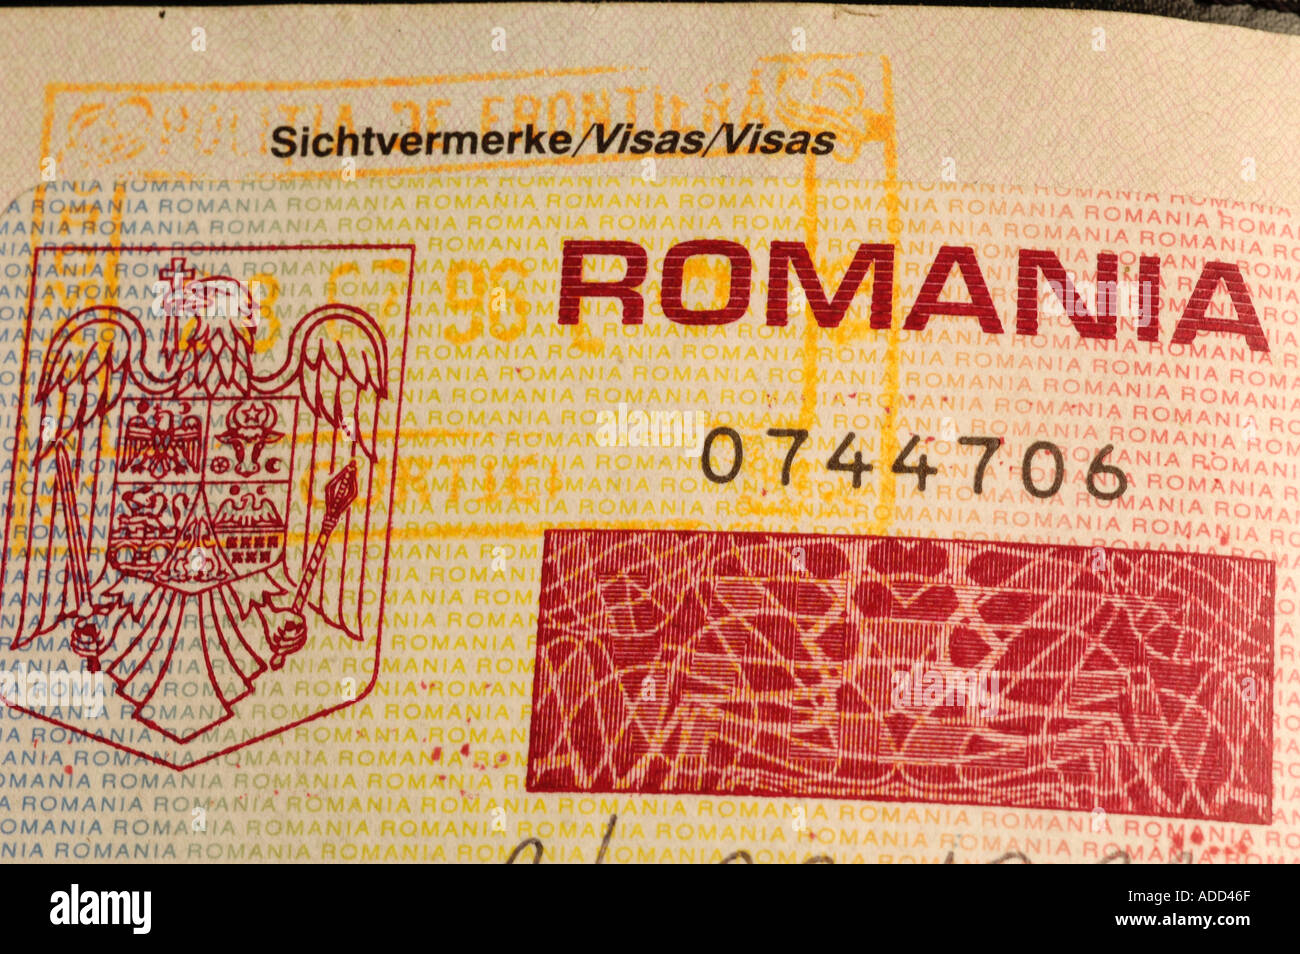 passport with visa form Romania Stock Photo - Alamy